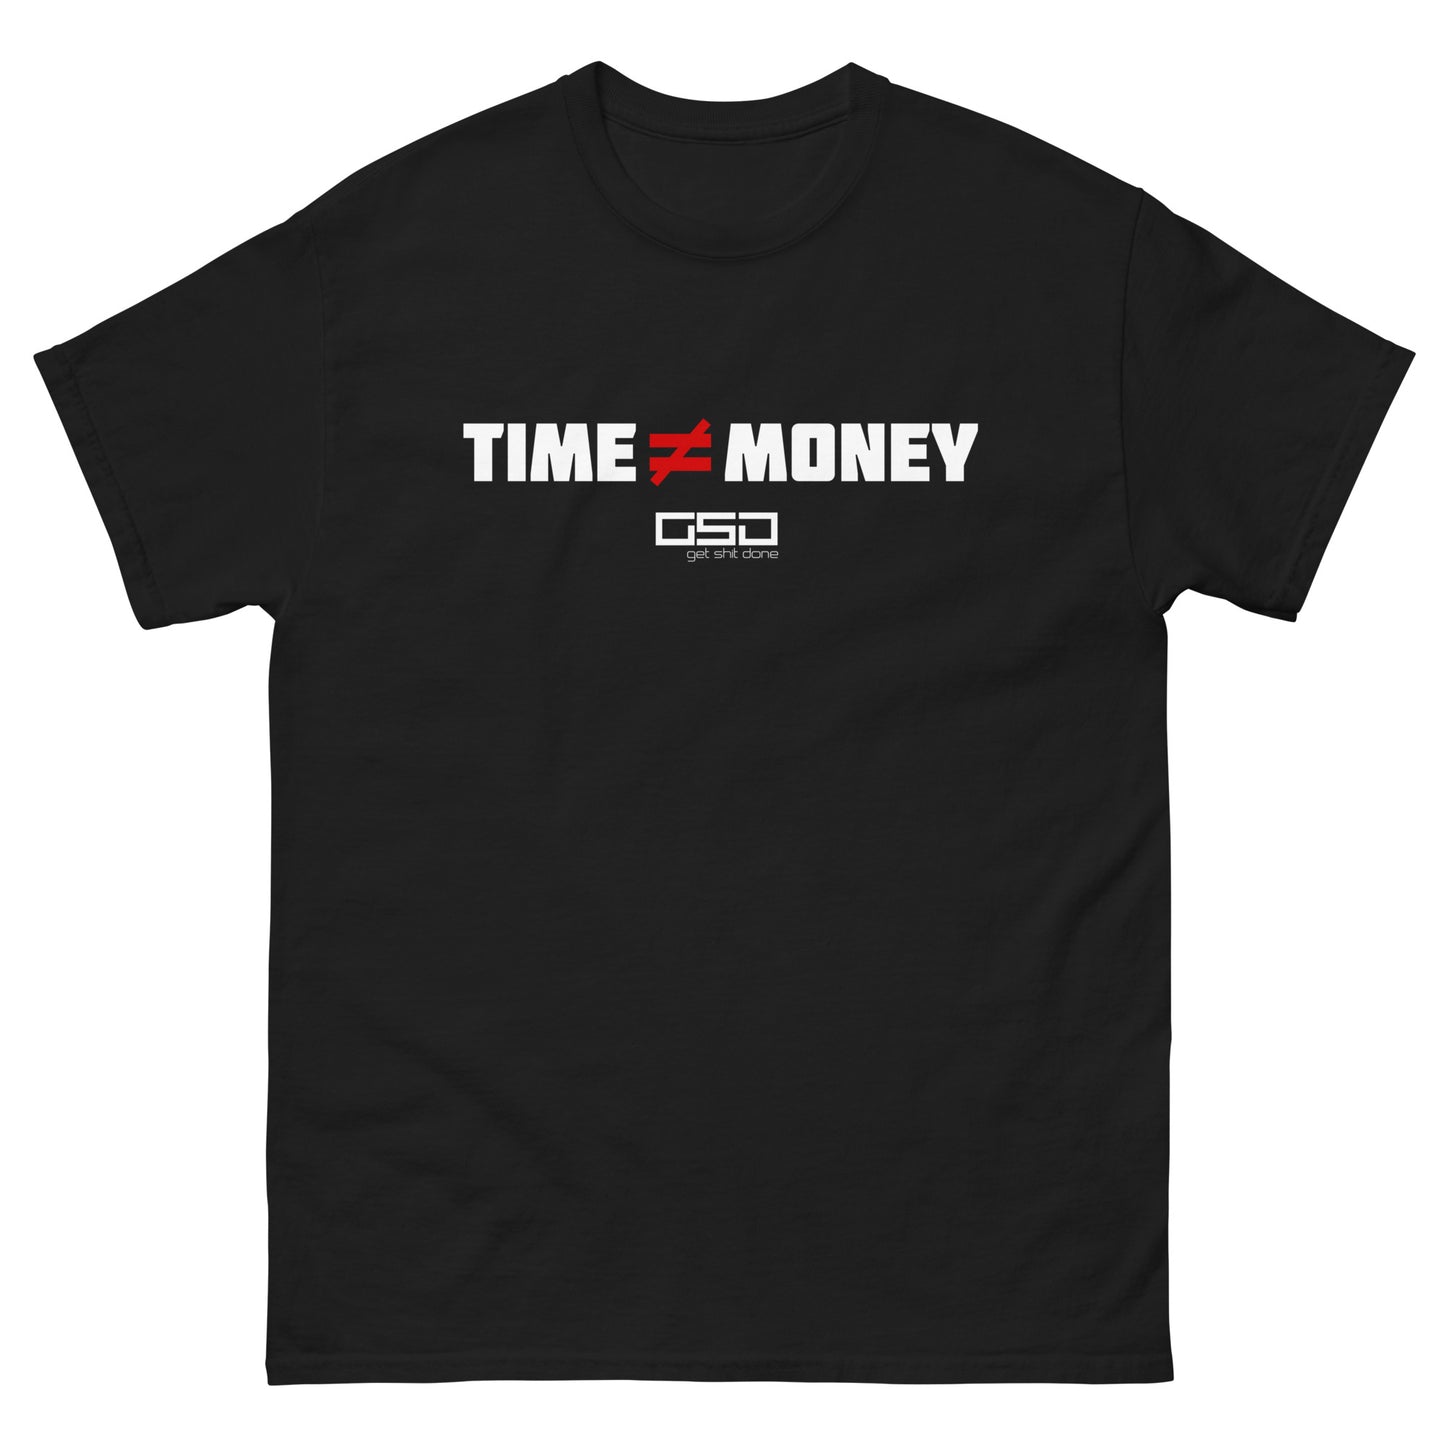 Time ≠ Money-Classic tee